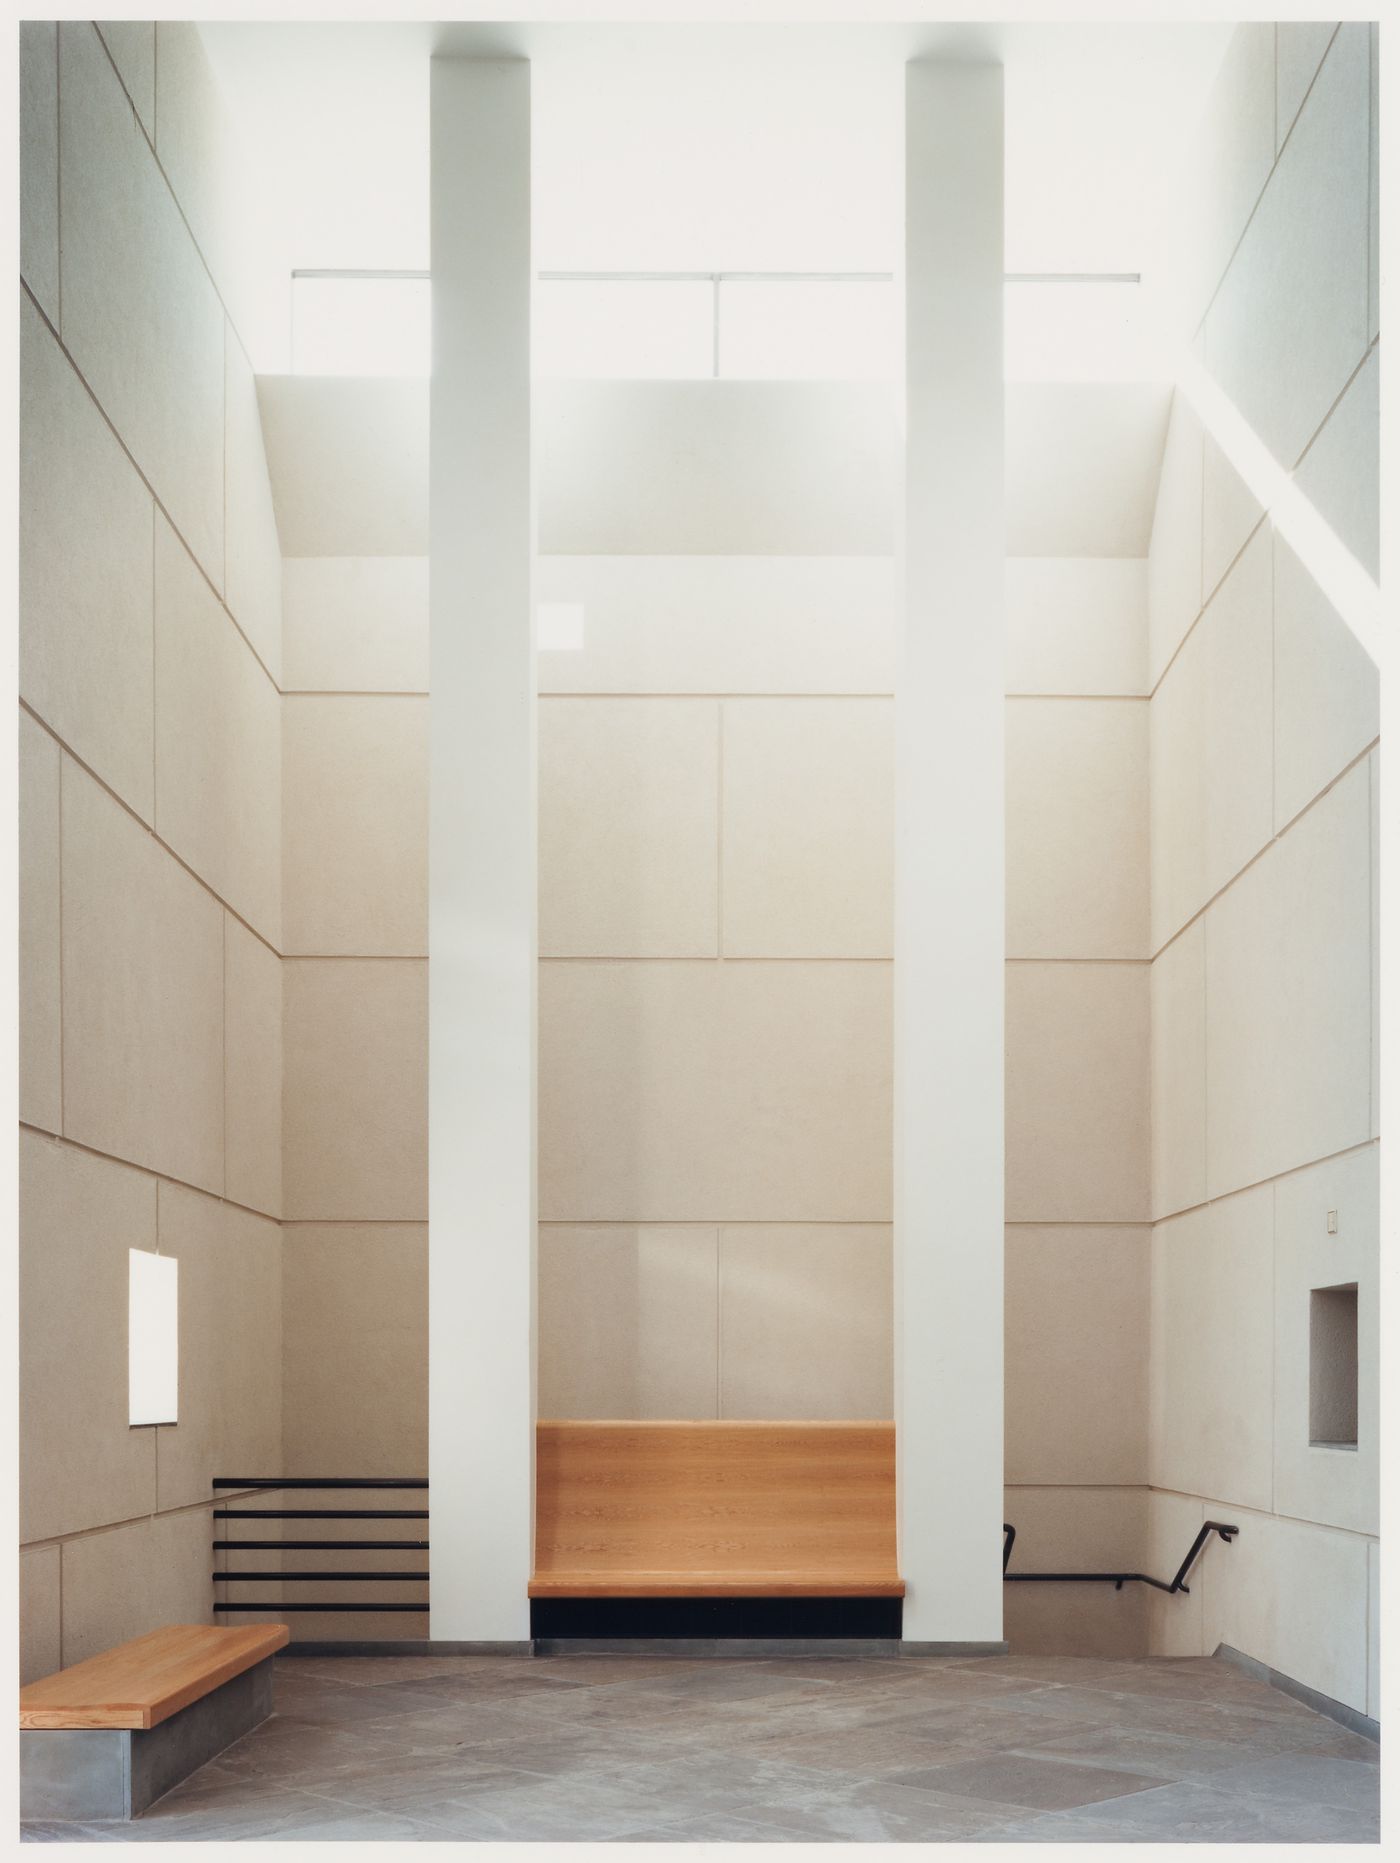 Arthur M. Sackler Museum, Harvard University, Cambridge, Massachusetts: interior view